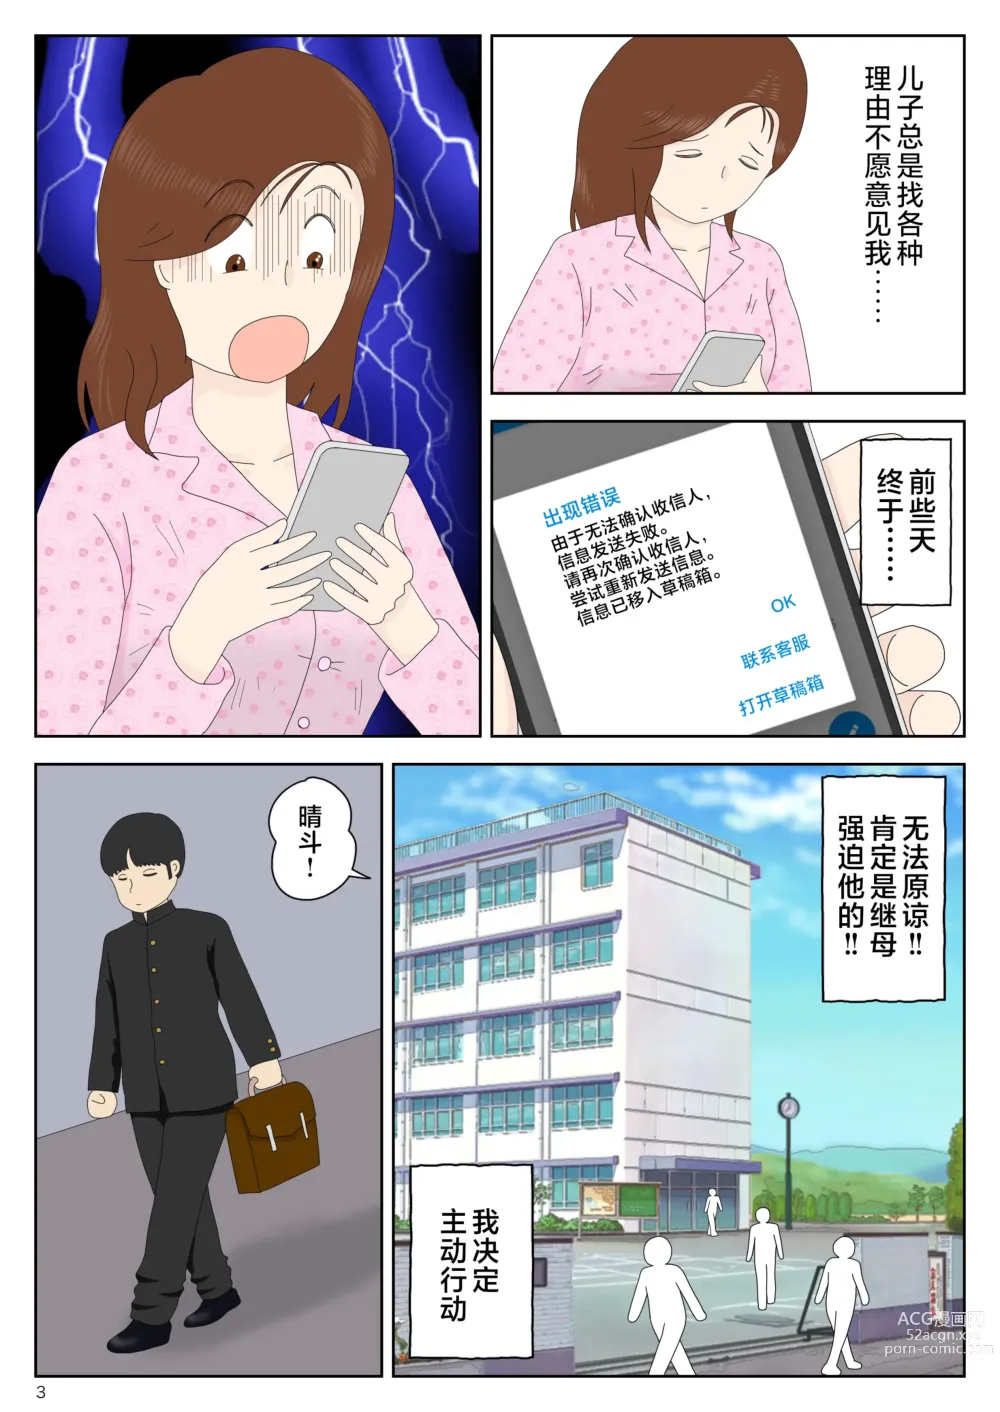 Page 3 of doujinshi Sasou Onna